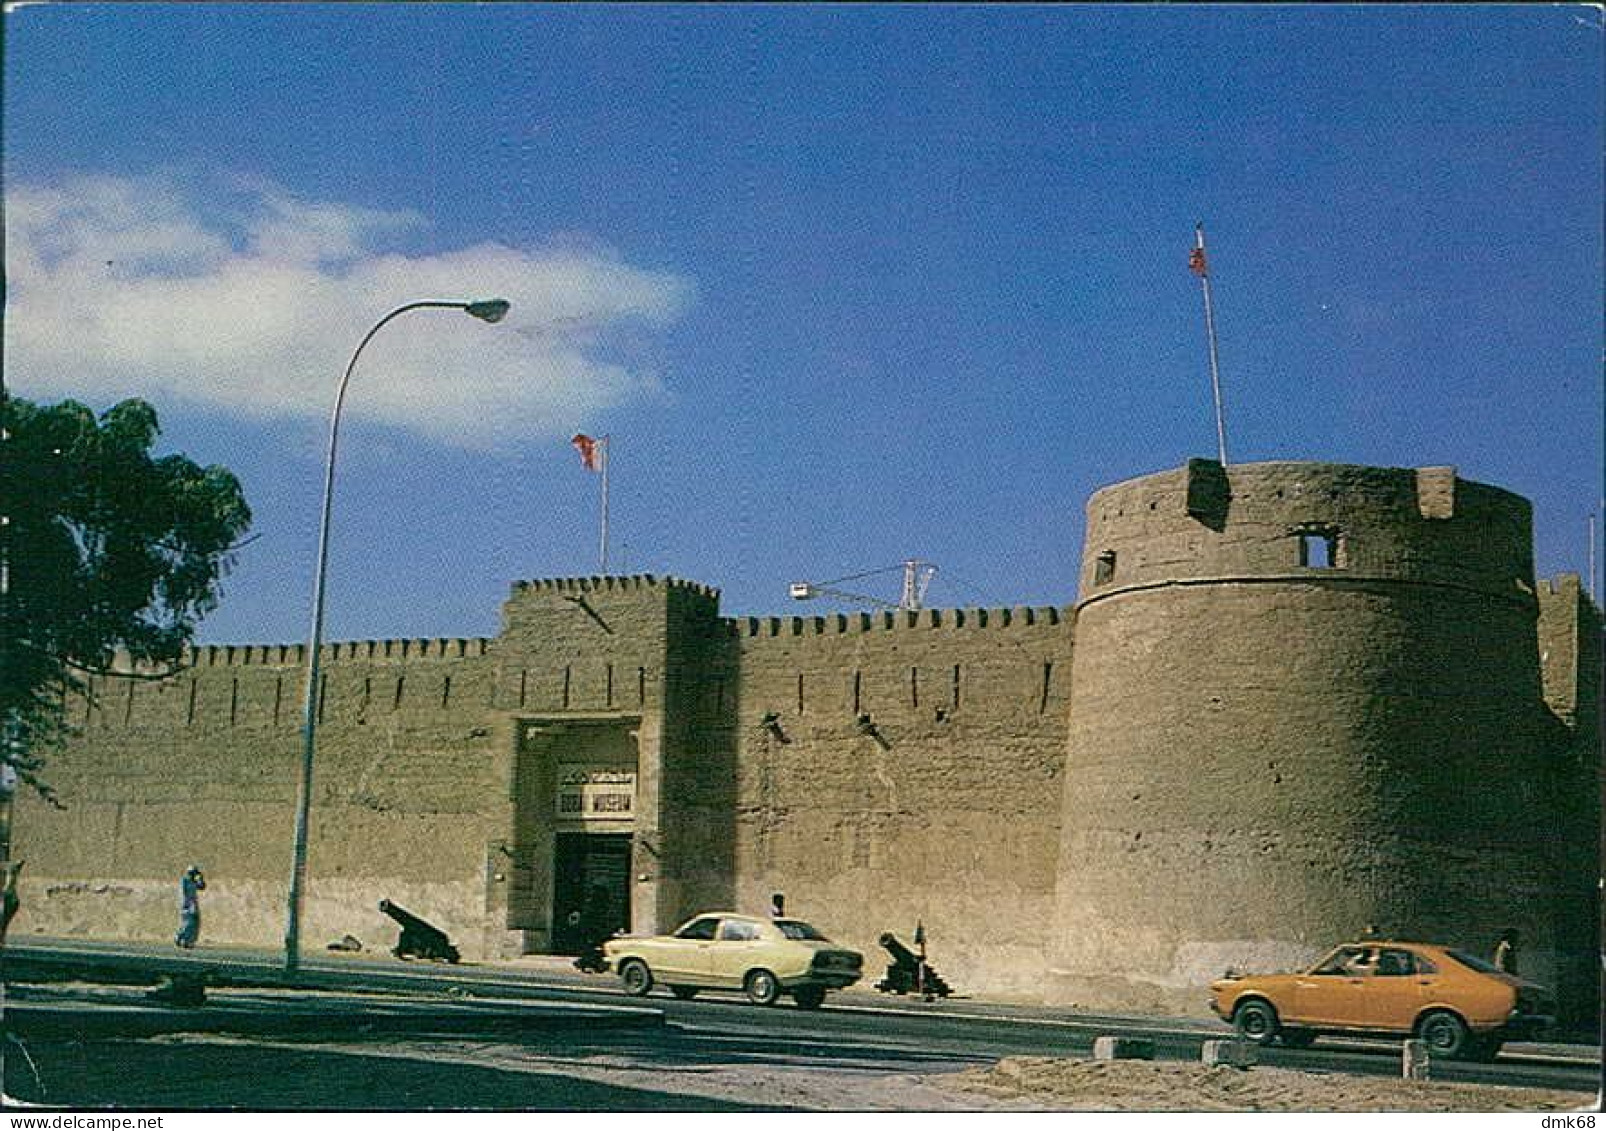 UNITED ARAB EMIRATES - DUBAI MUSEUM - PHOTO & COP. FAROOK INTERN. STATIONERY - 1970s/80s (17310) - Emirati Arabi Uniti